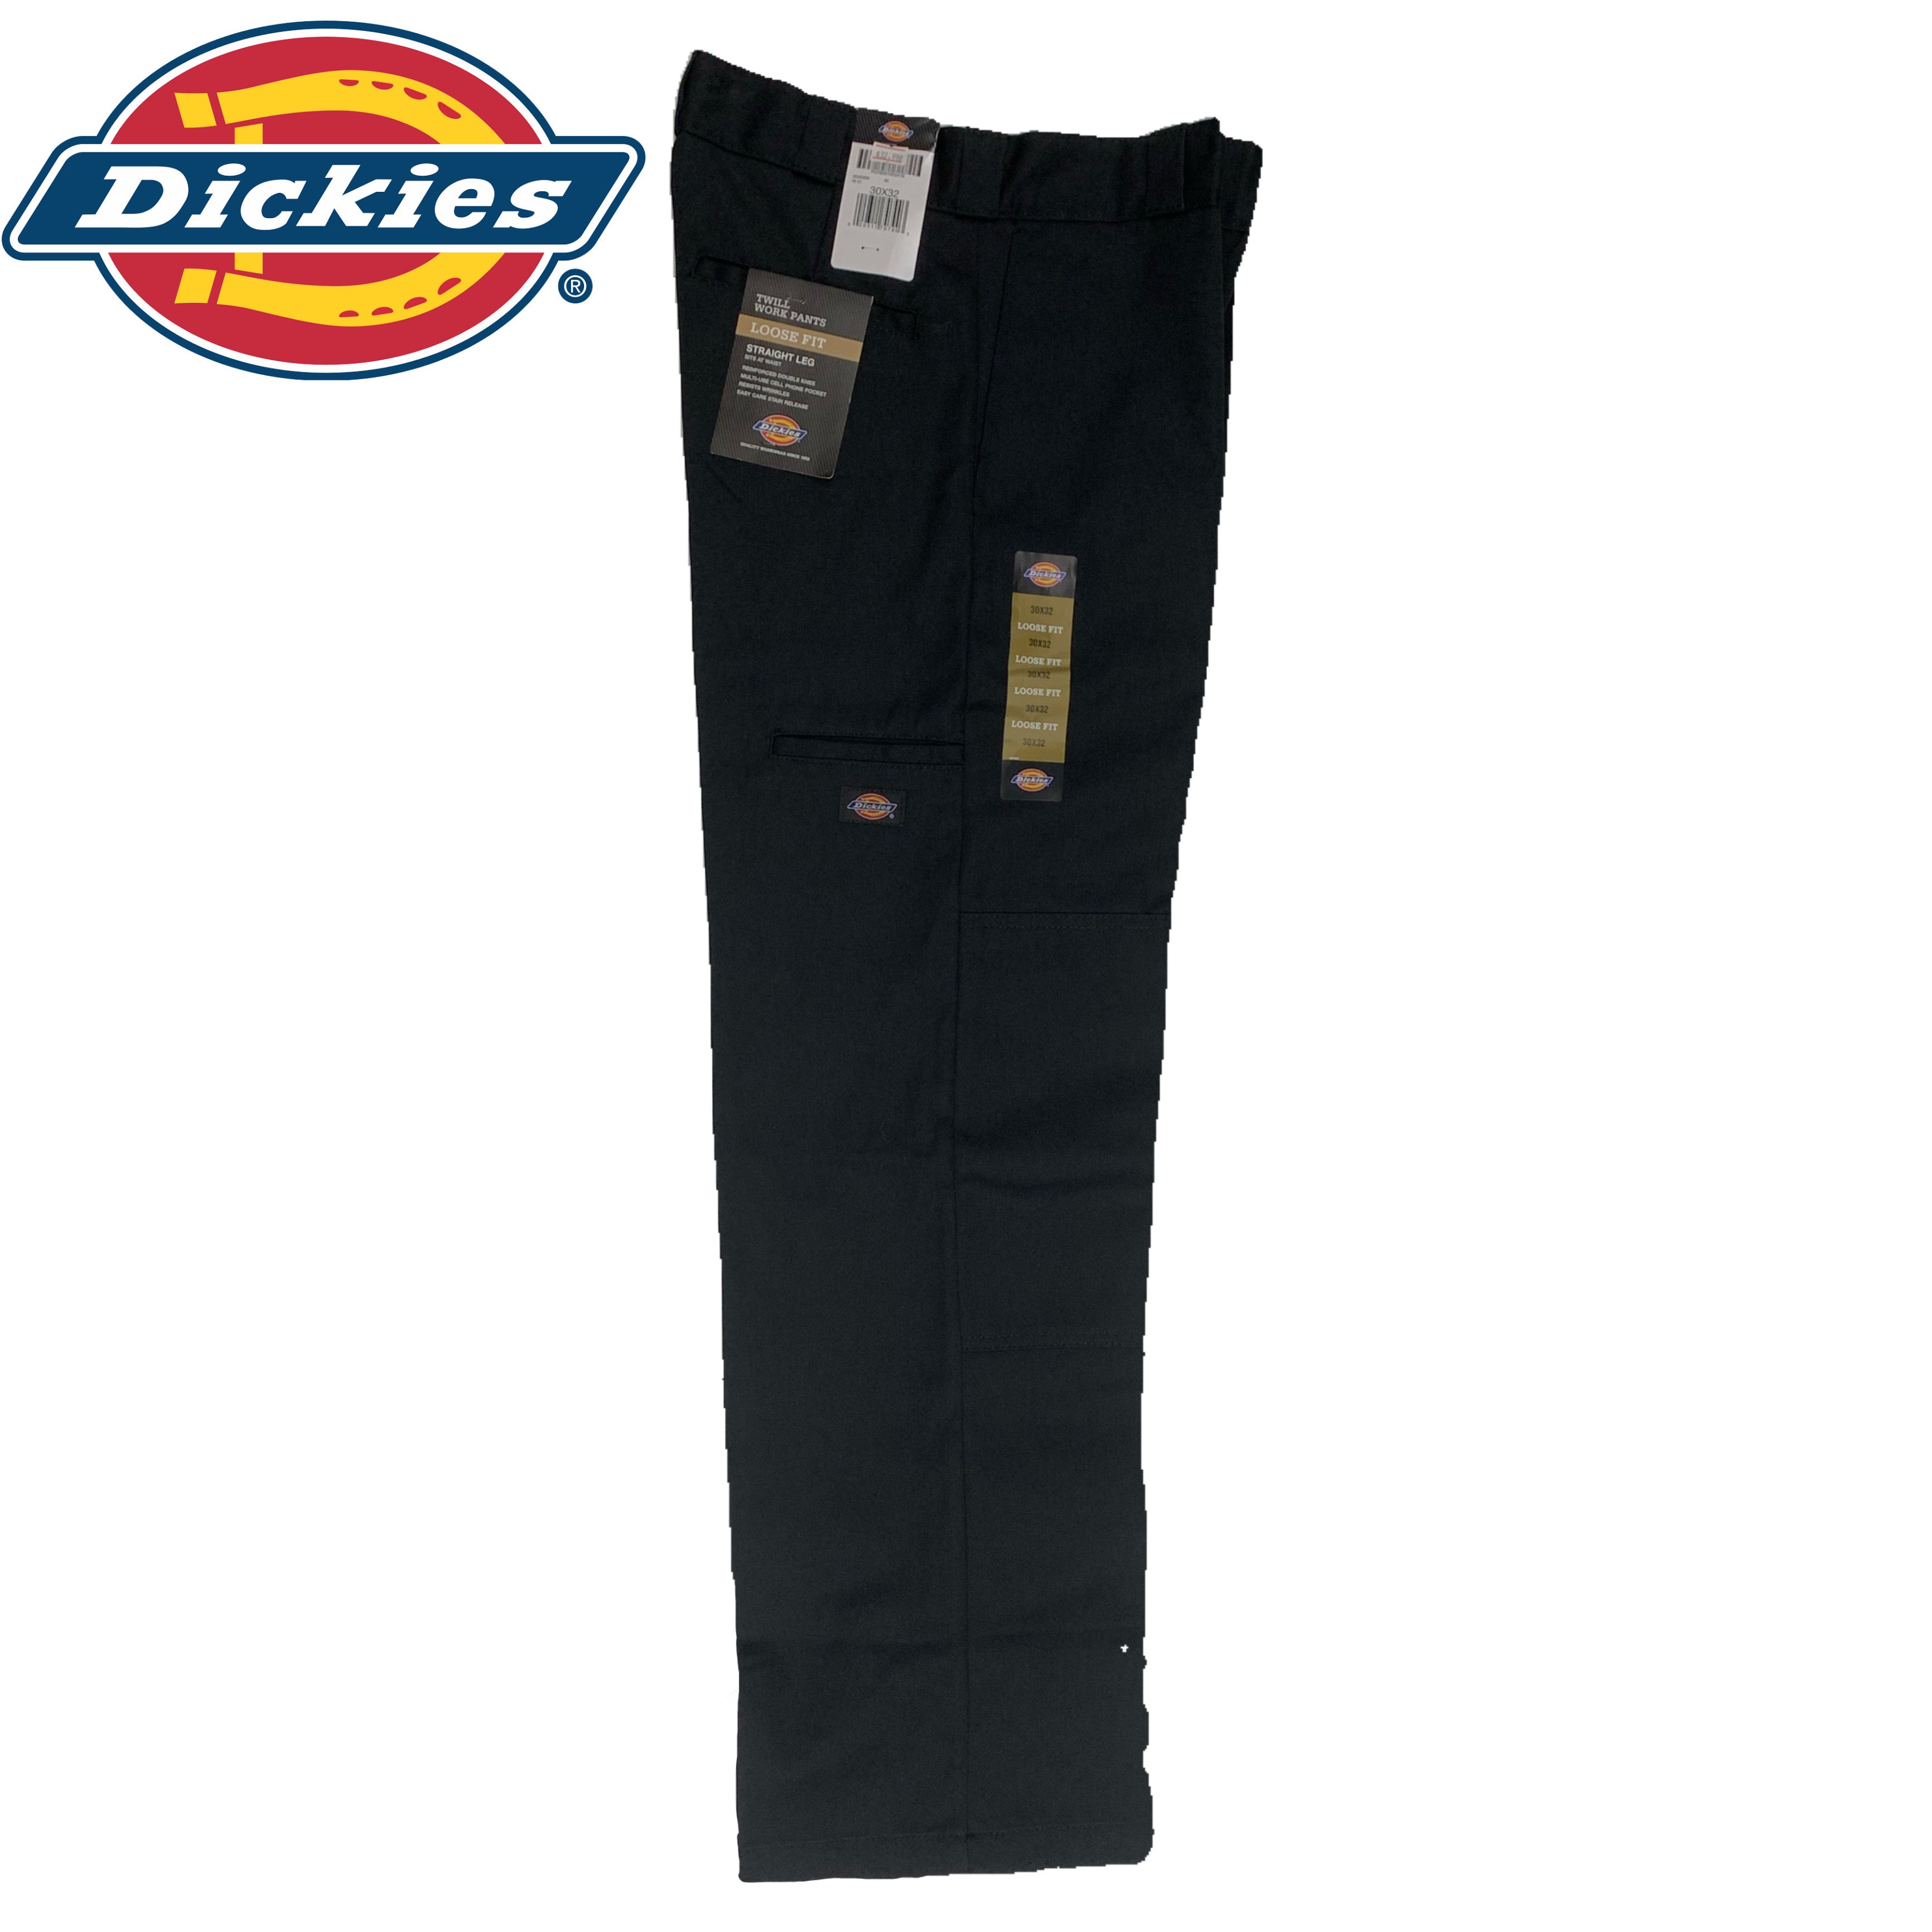 Dickies Women's Loose Fit Double Knee Work Pants in Charcoal Gray